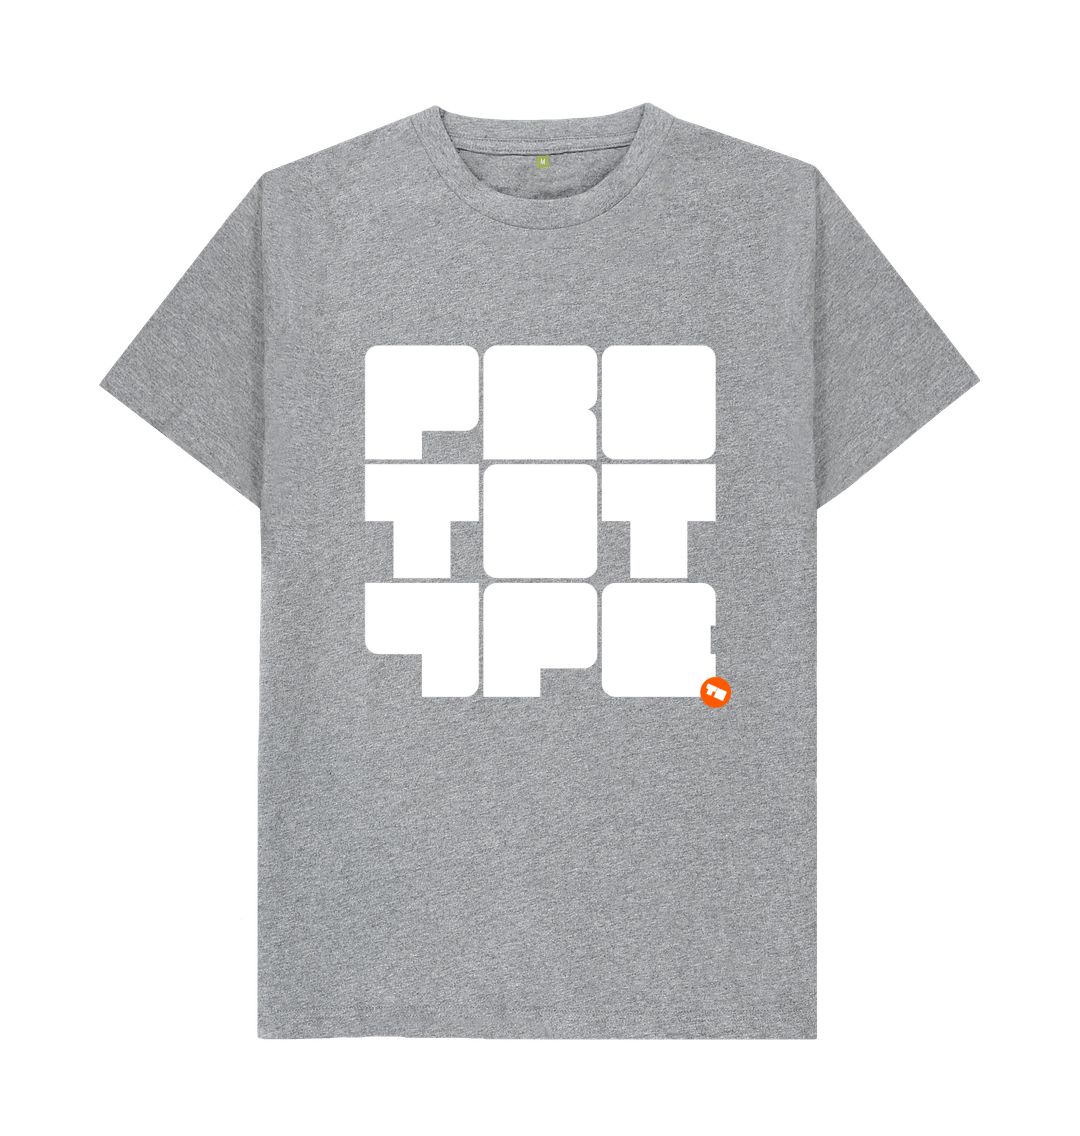 Athletic Grey PrototypeTM T-shirts